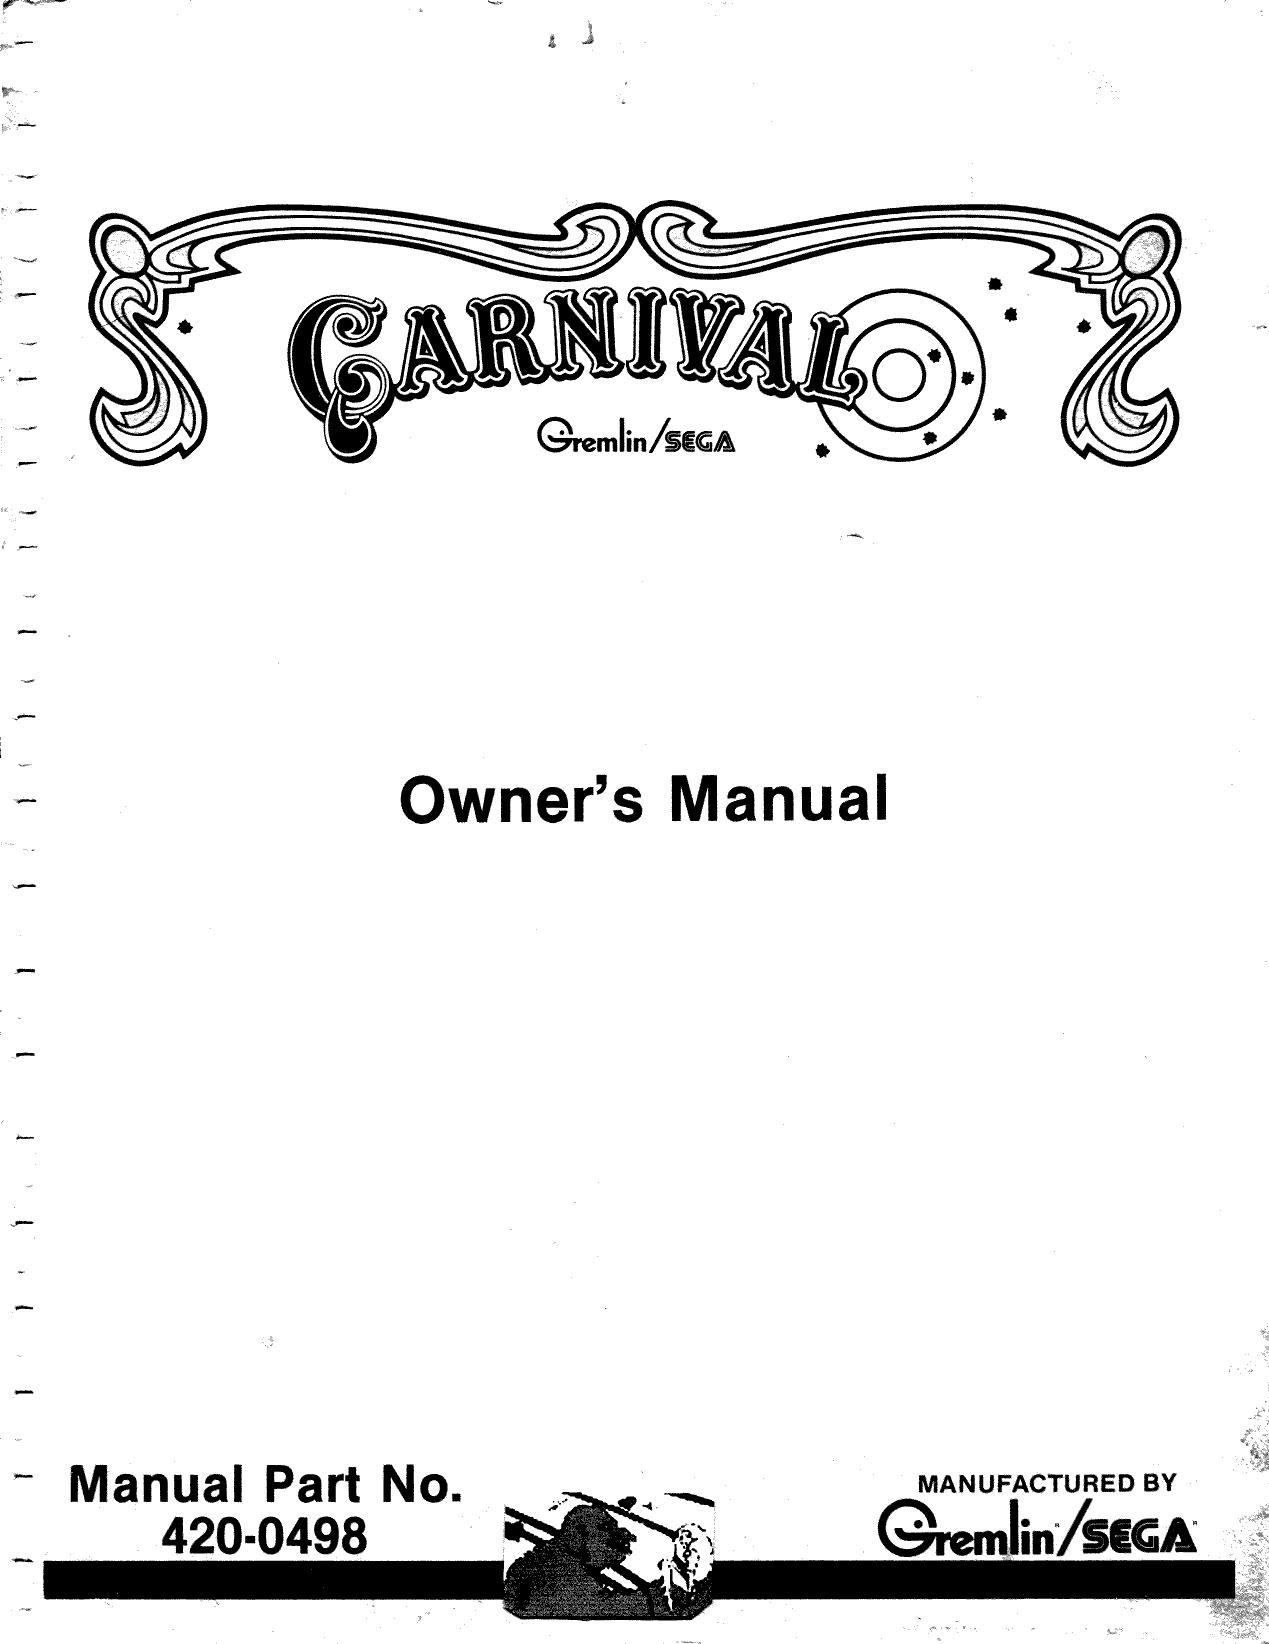 Carnival Manual